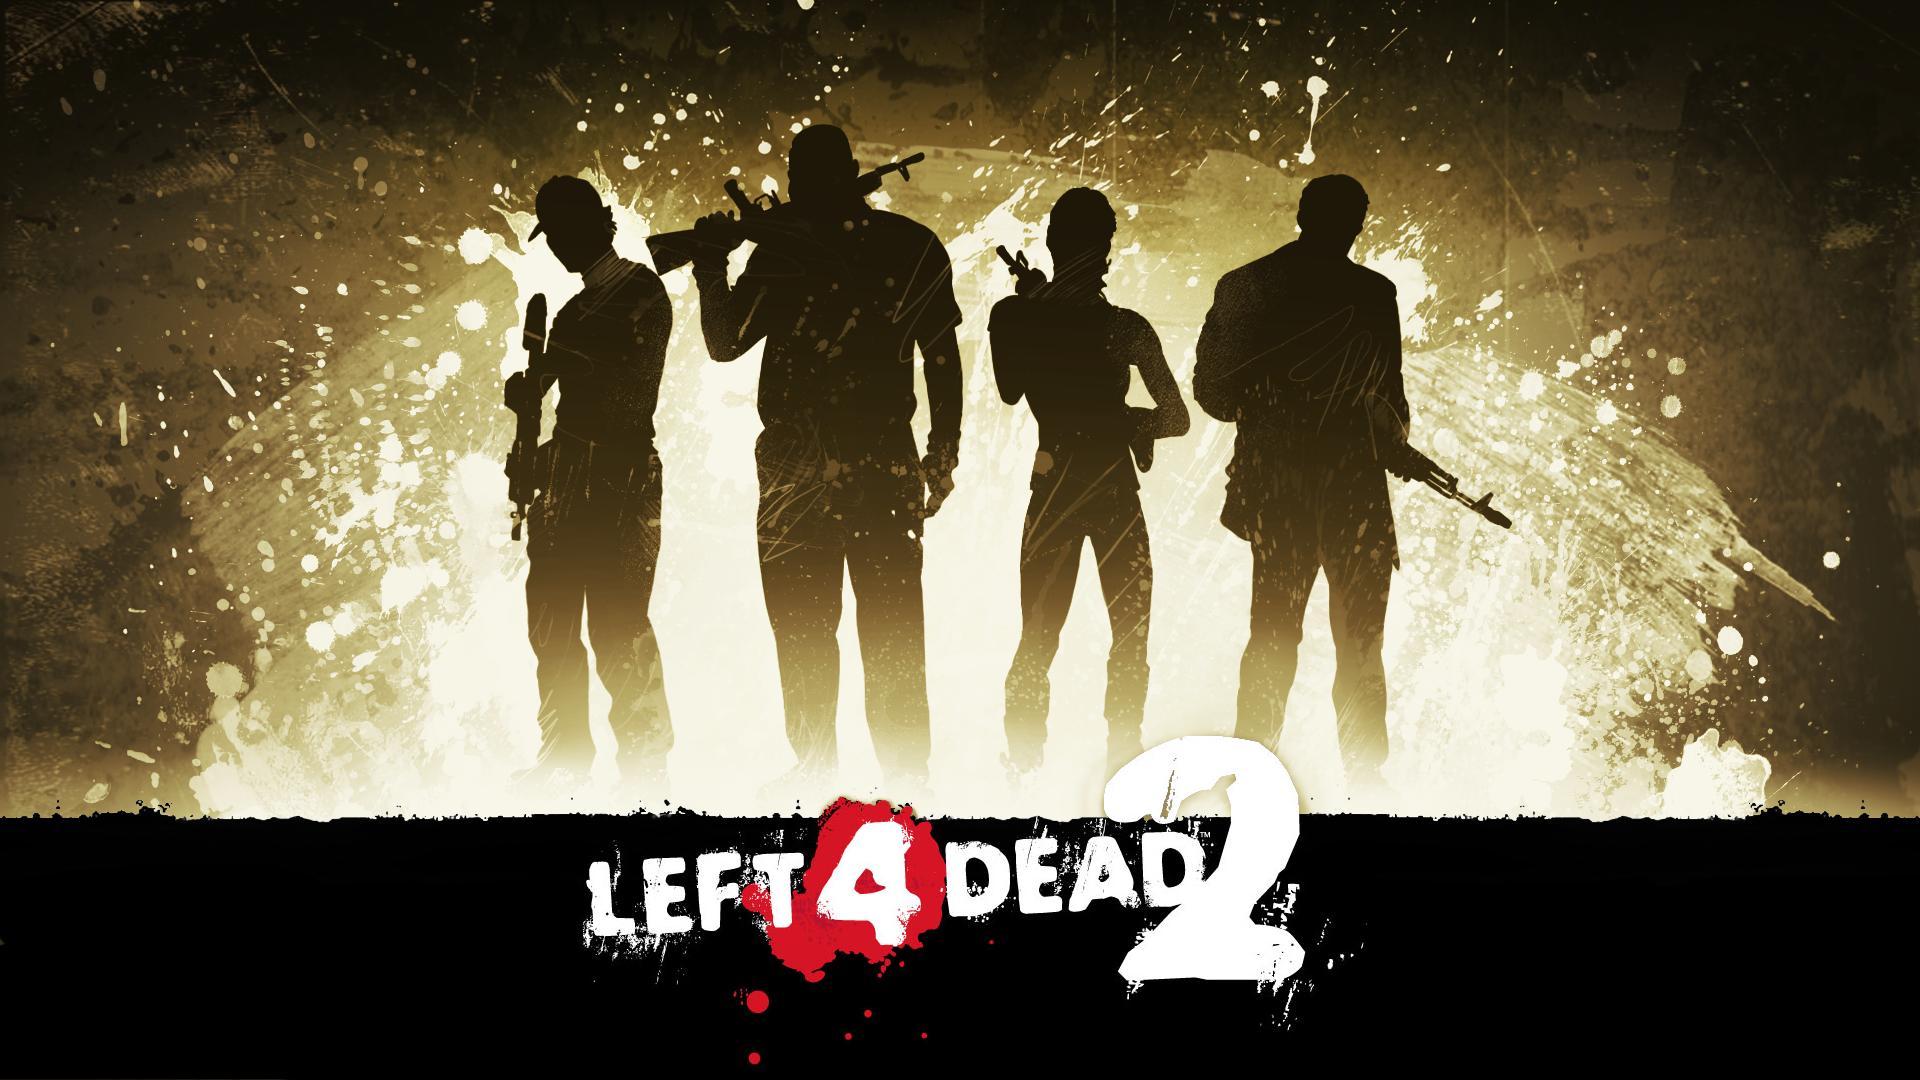 Steam Workshop - Left 4 Dead 2 HD Asset Collection